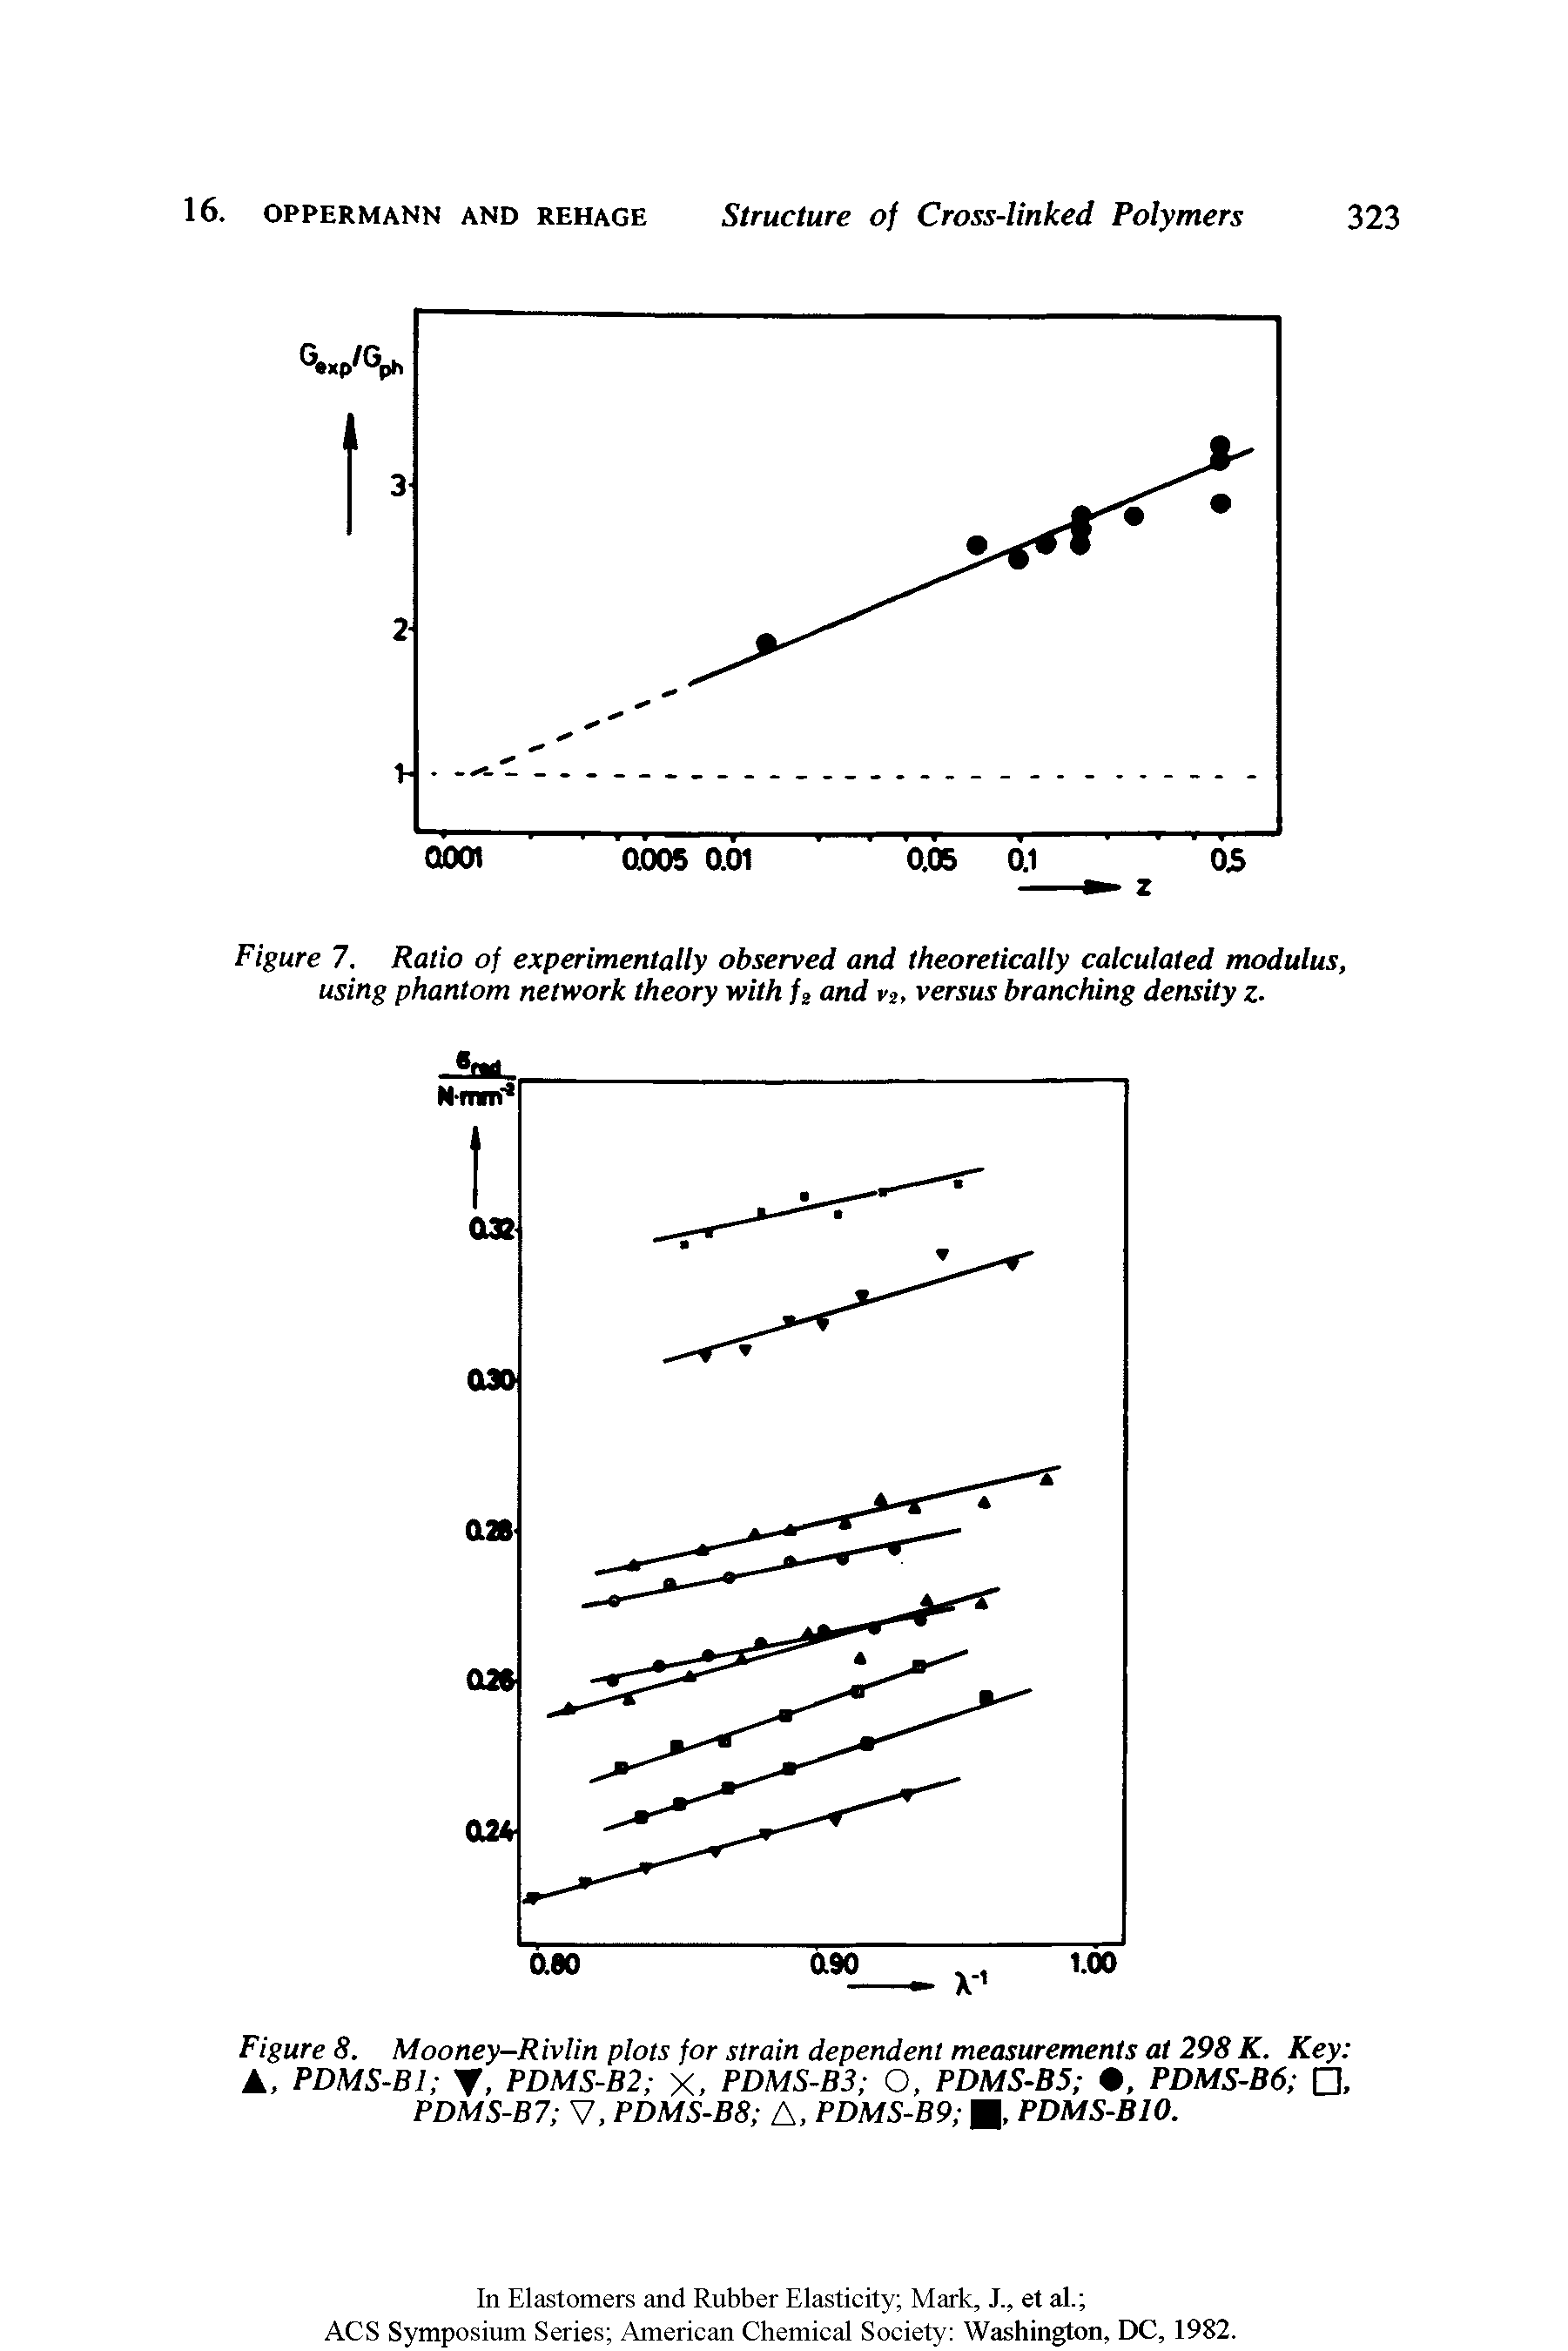 Figure 8. Mooney-Rivlin plots for strain dependent measurements at 298 K. Key A, PDMS-BI , PDMS-B2 X, PDMS-B3 O, PDMS-B5 , PDMS-B6 , PDMS-B7 V, PDMS-B8 A, PDMS-B9 PDMS-B10.